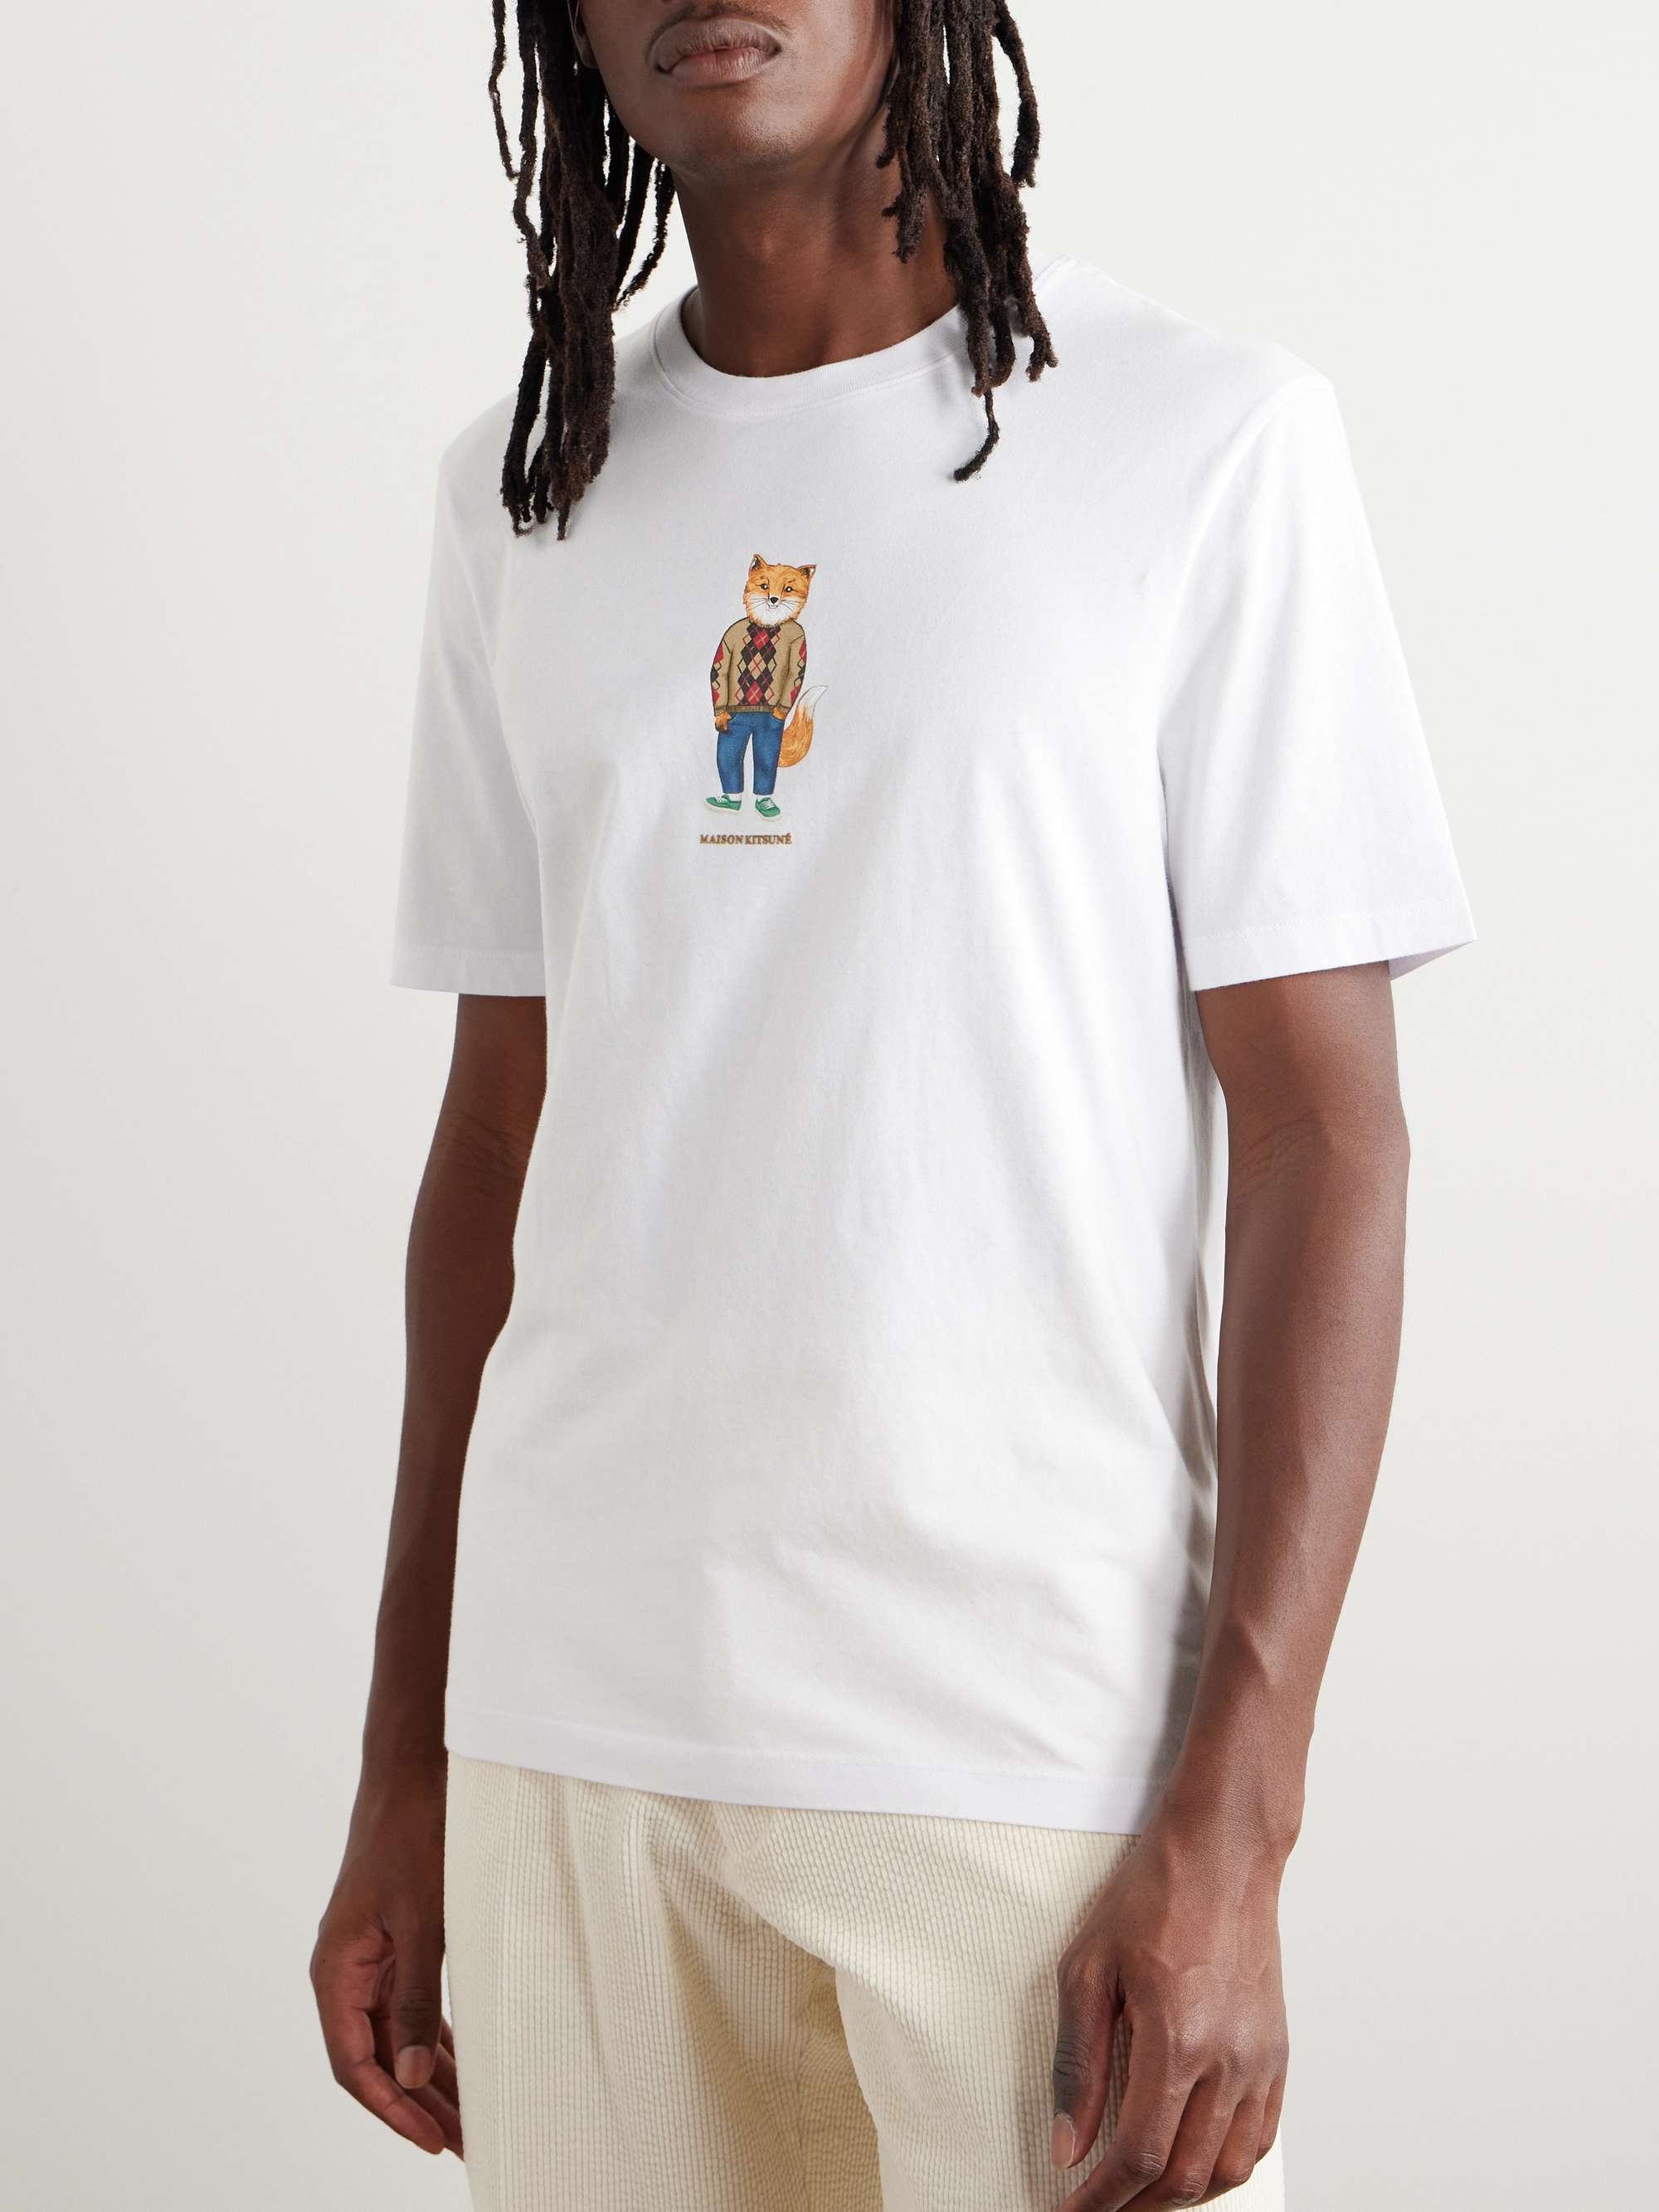 MAISON KITSUNÉ Logo-Print Cotton-Jersey T-Shirt for Men | MR PORTER